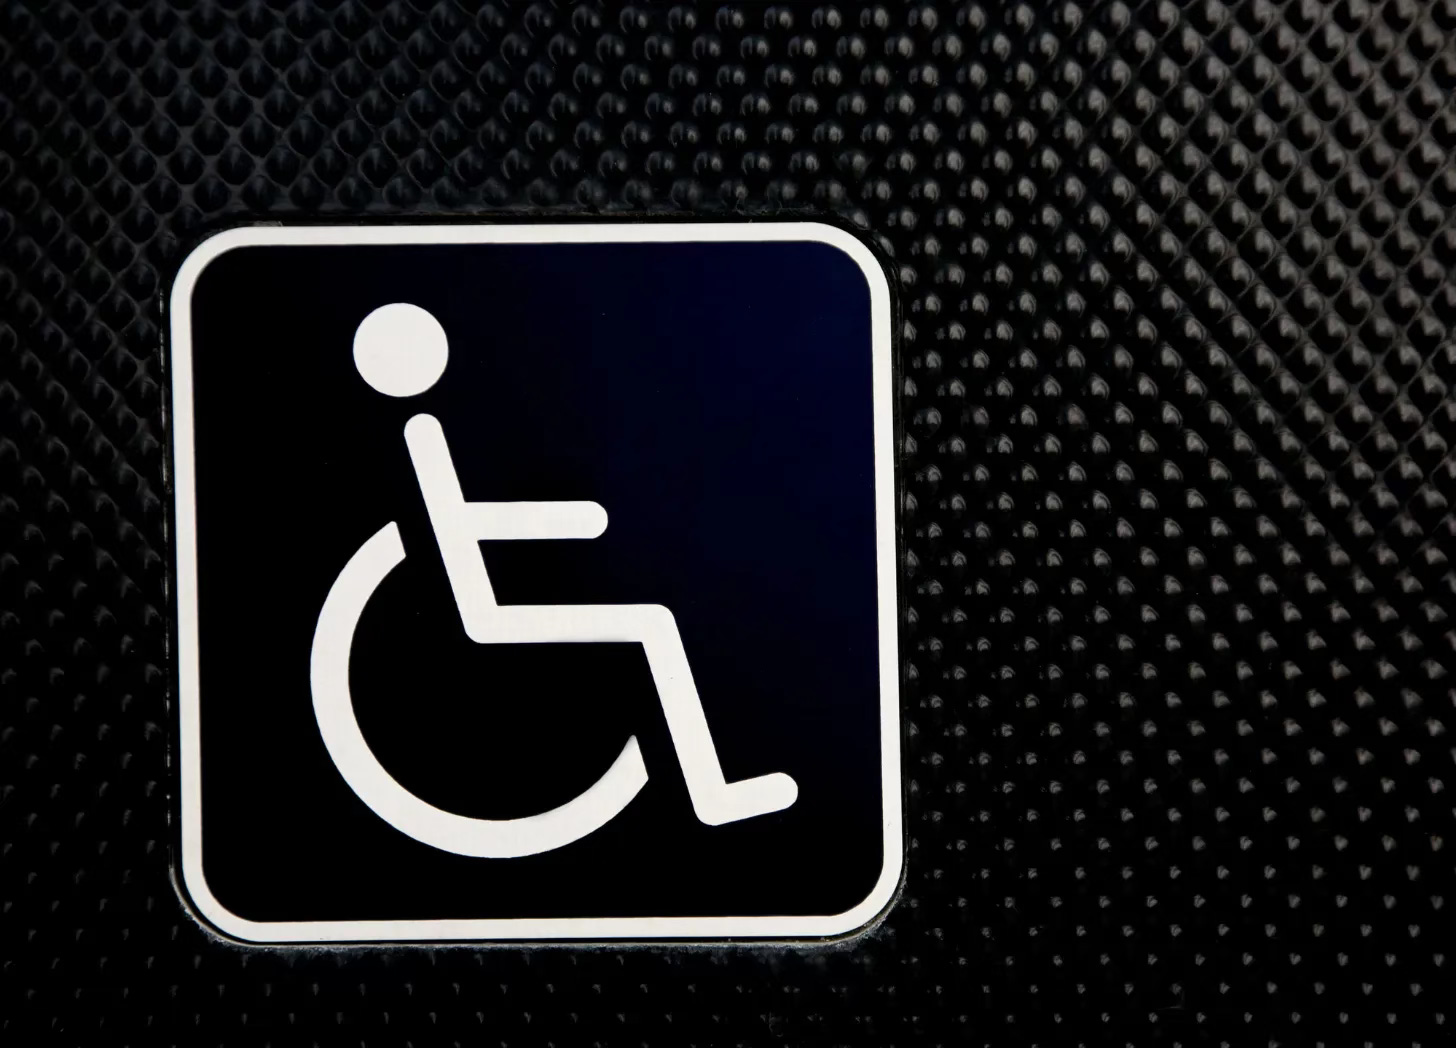 White wheelchair symbol on a black textured background